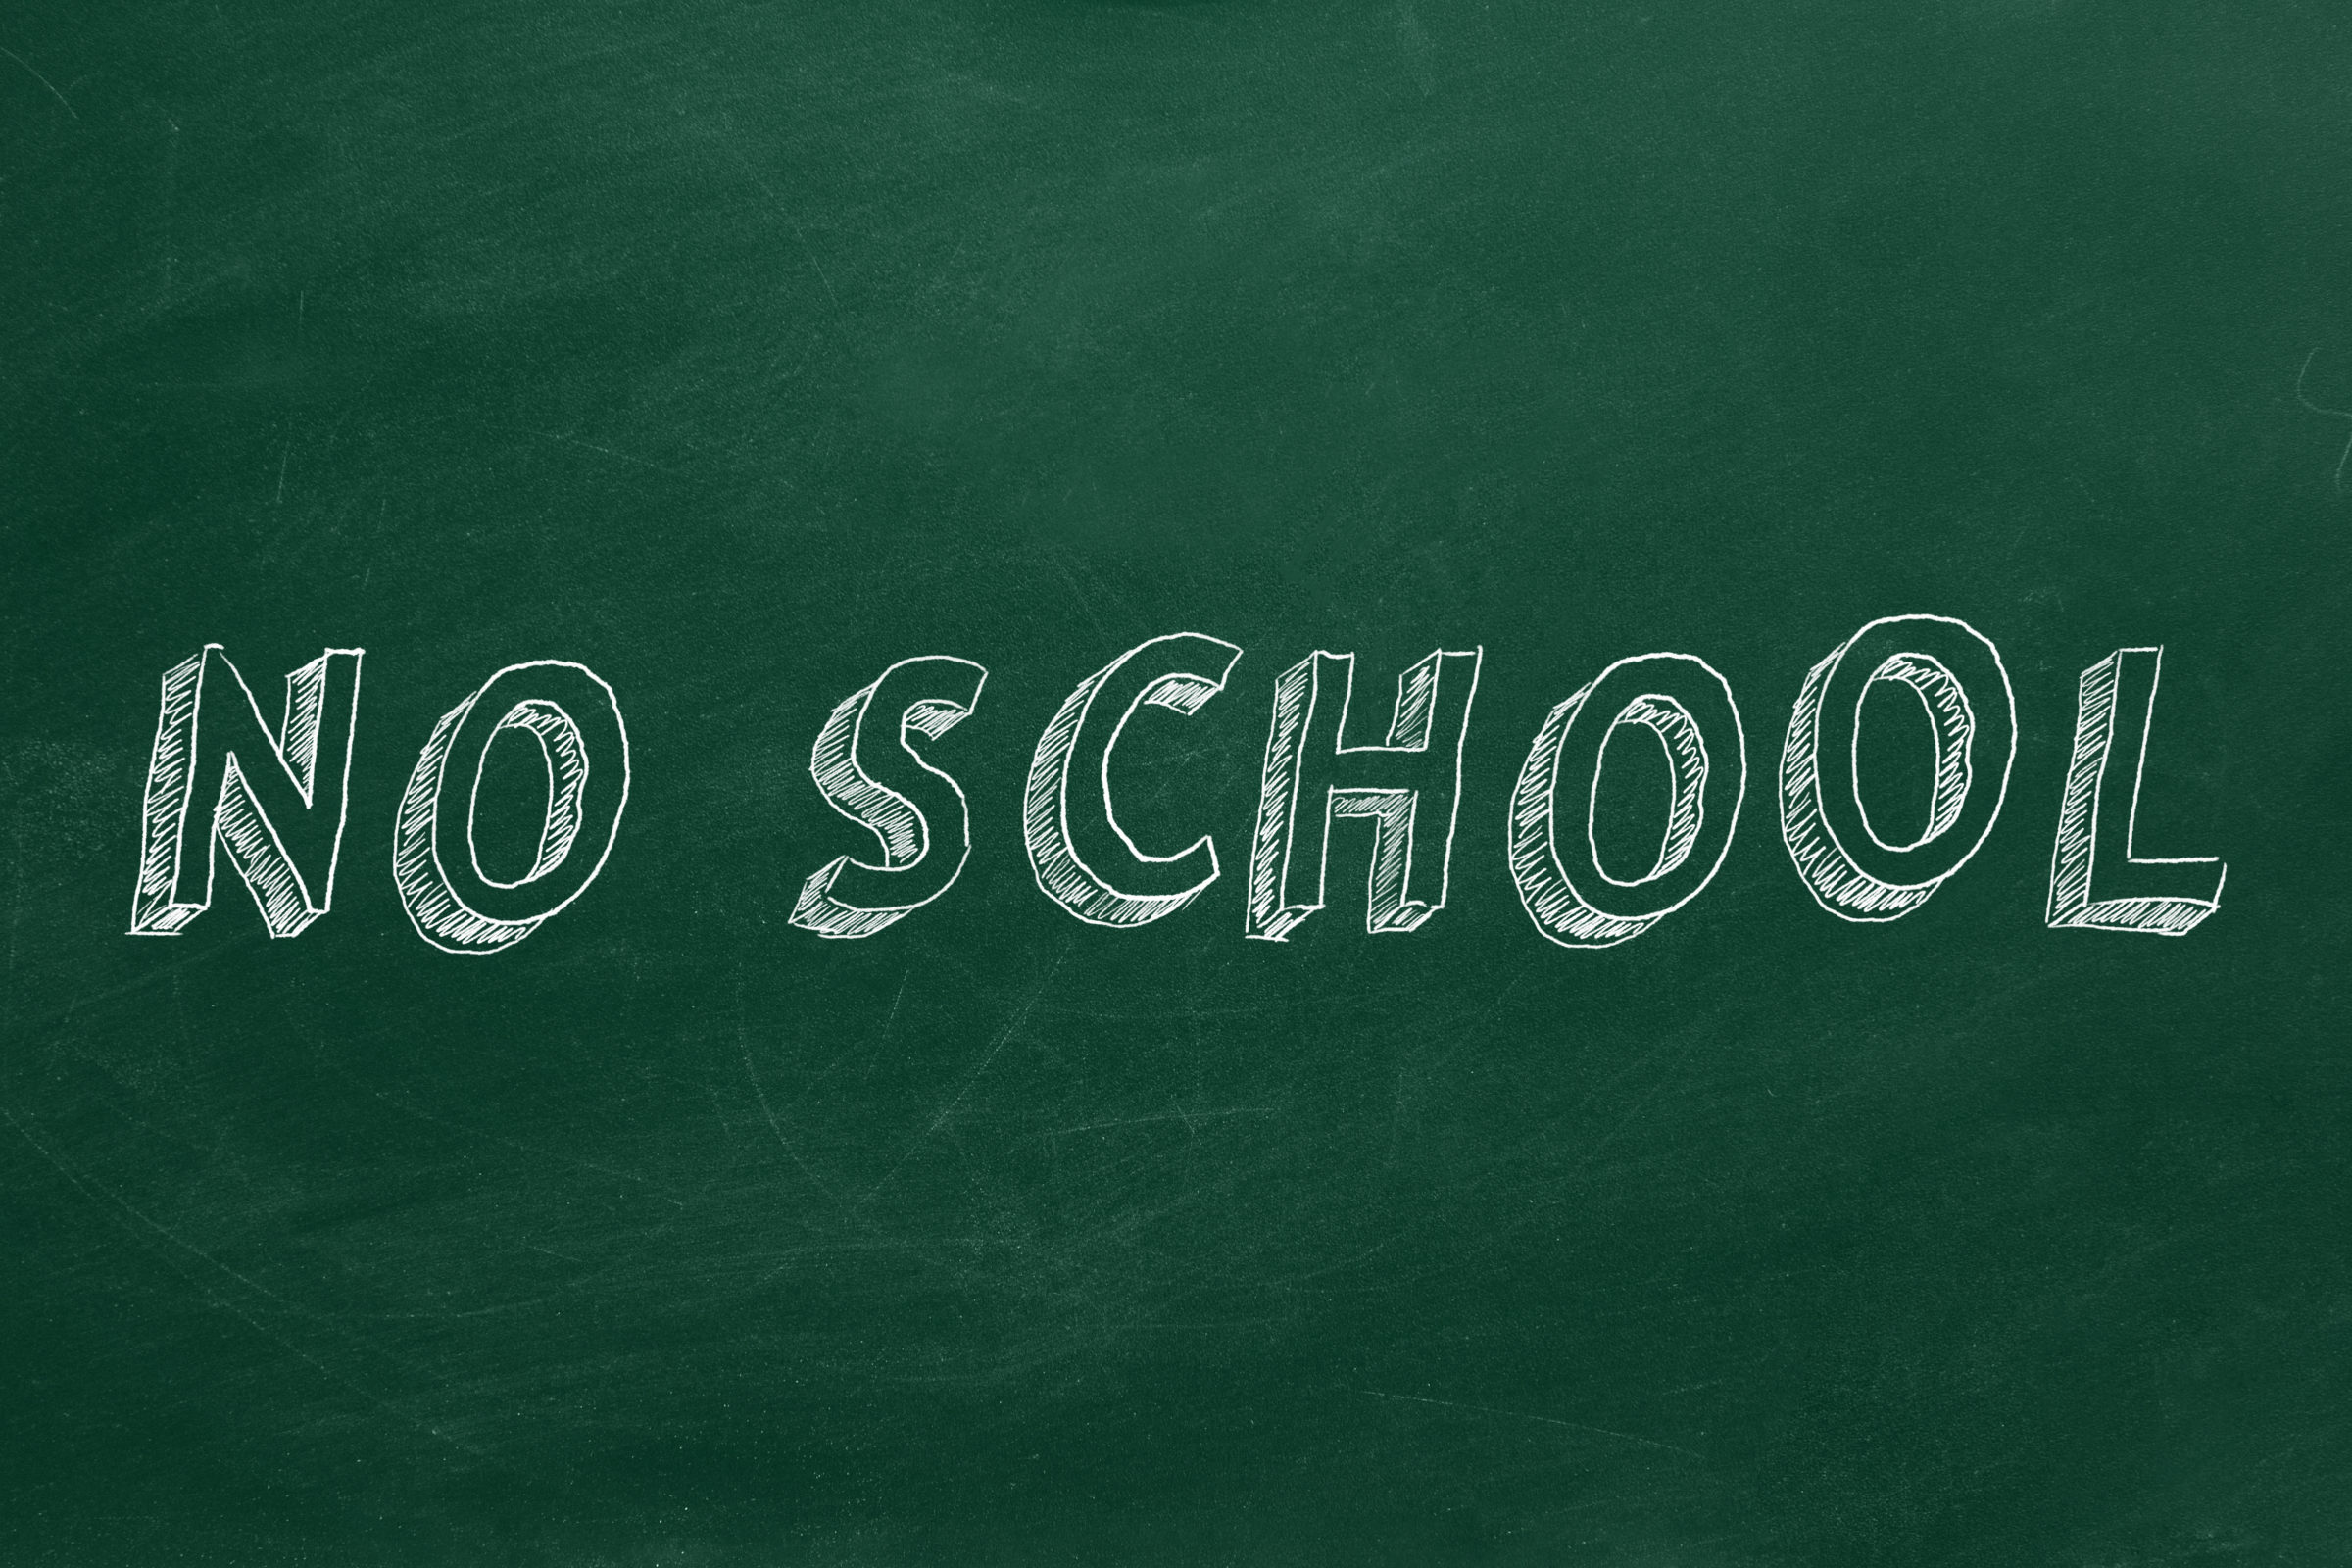 Hand drawing text "NO SCHOOL" on green chalkboard.